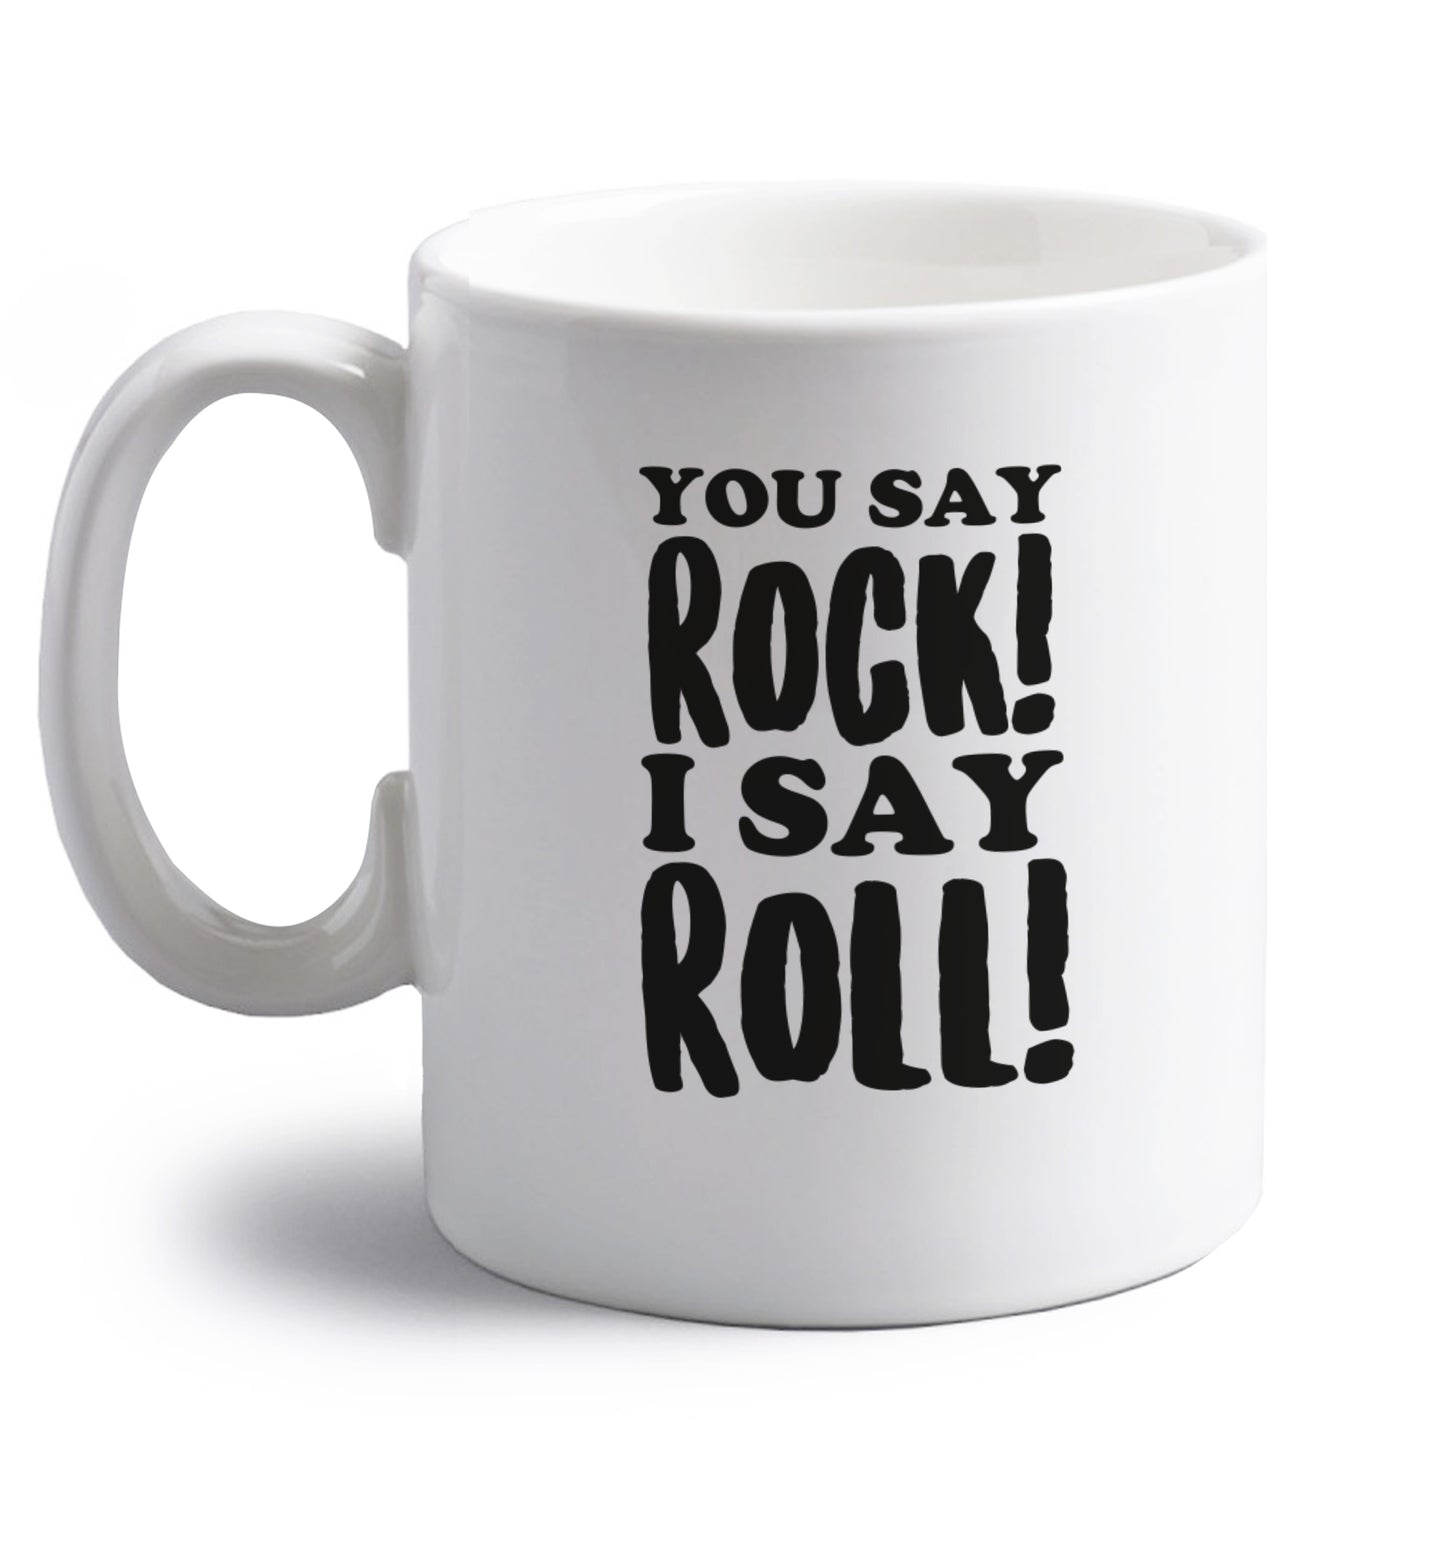 You say rock I say roll! right handed white ceramic mug 